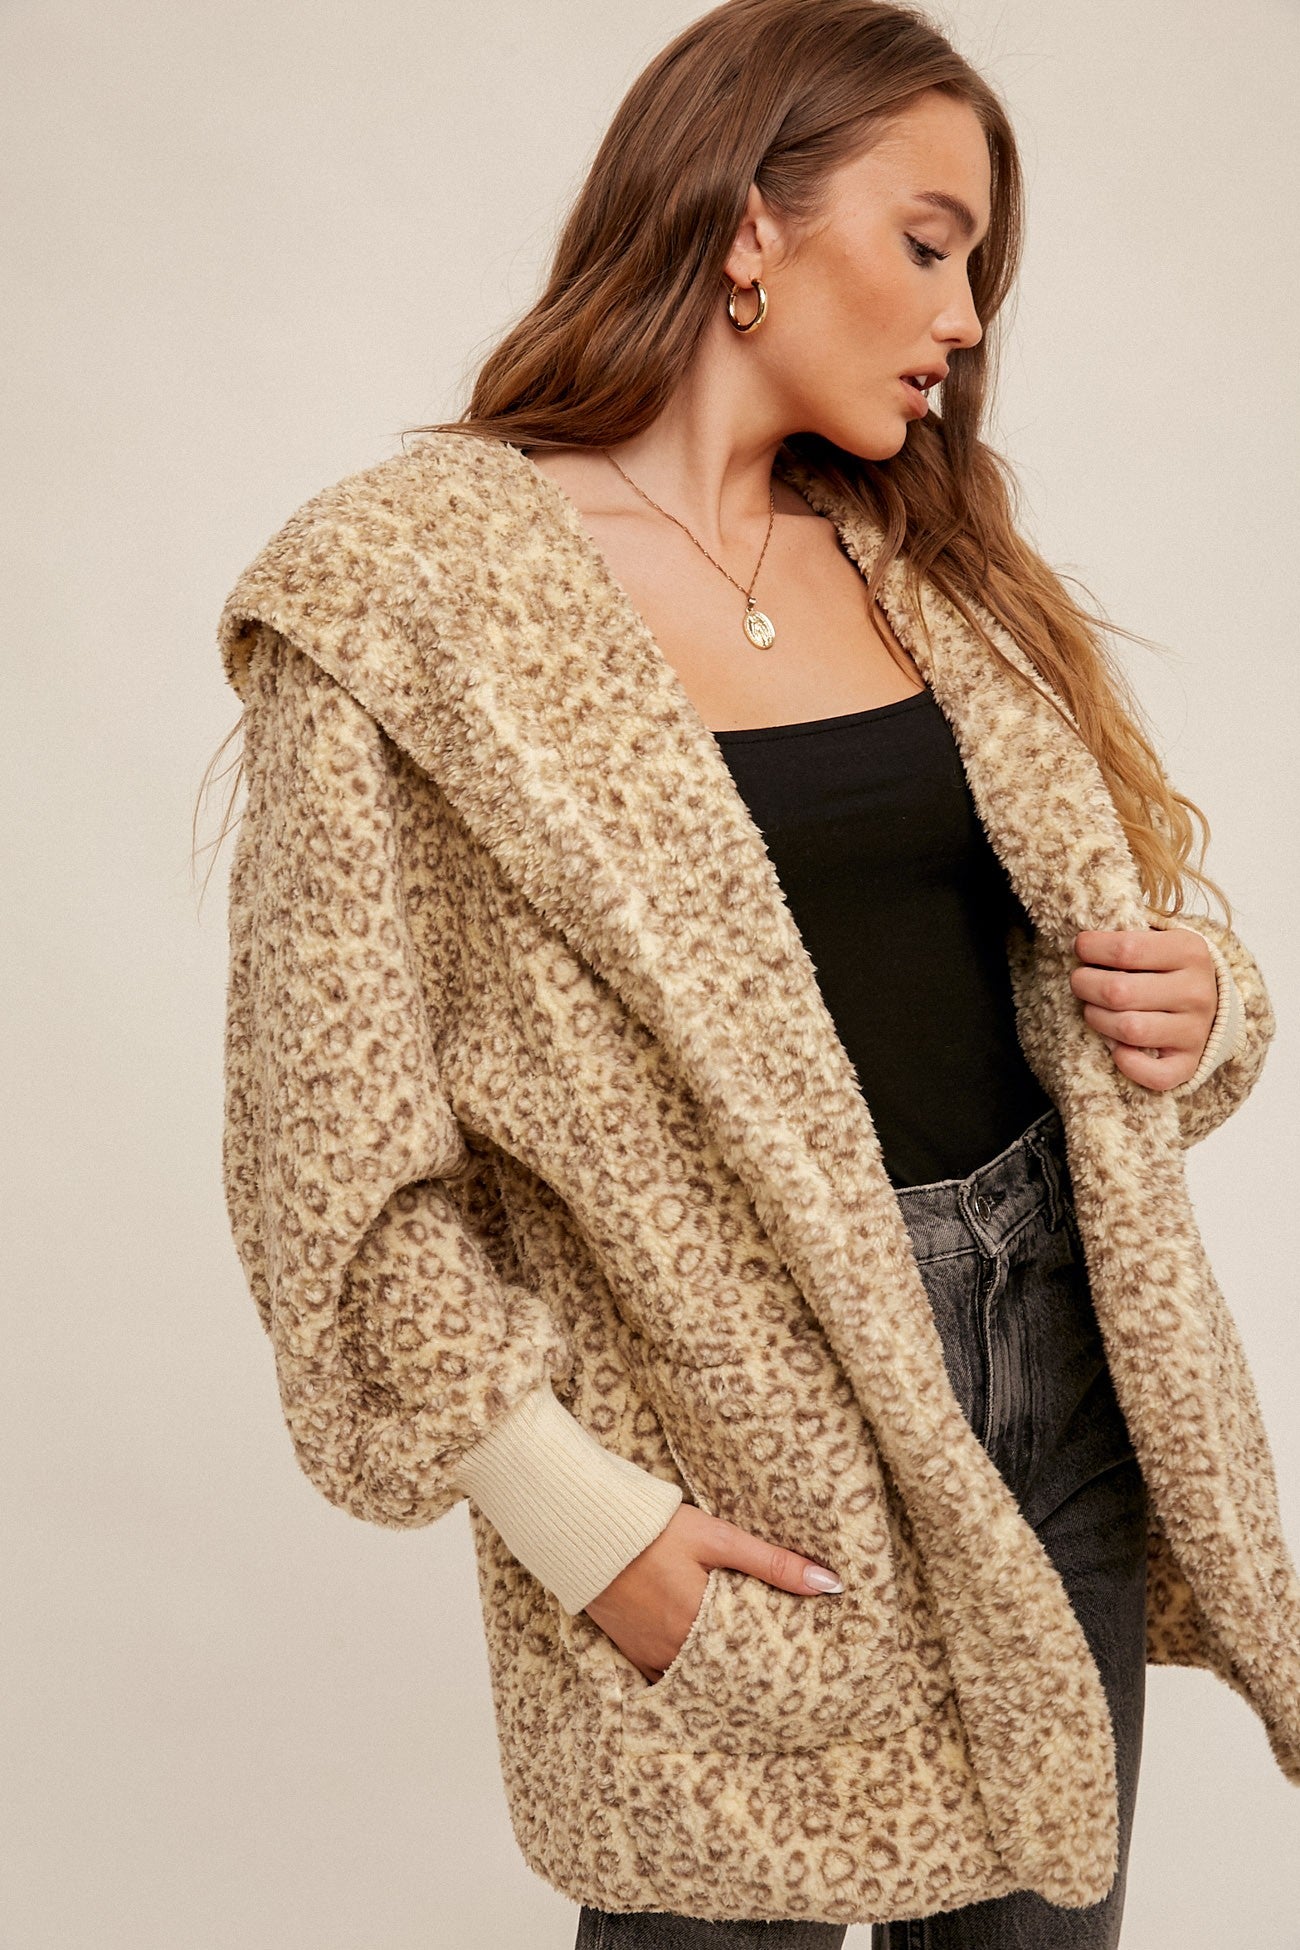 Leopard Fur Oversized Hoodie Jacket